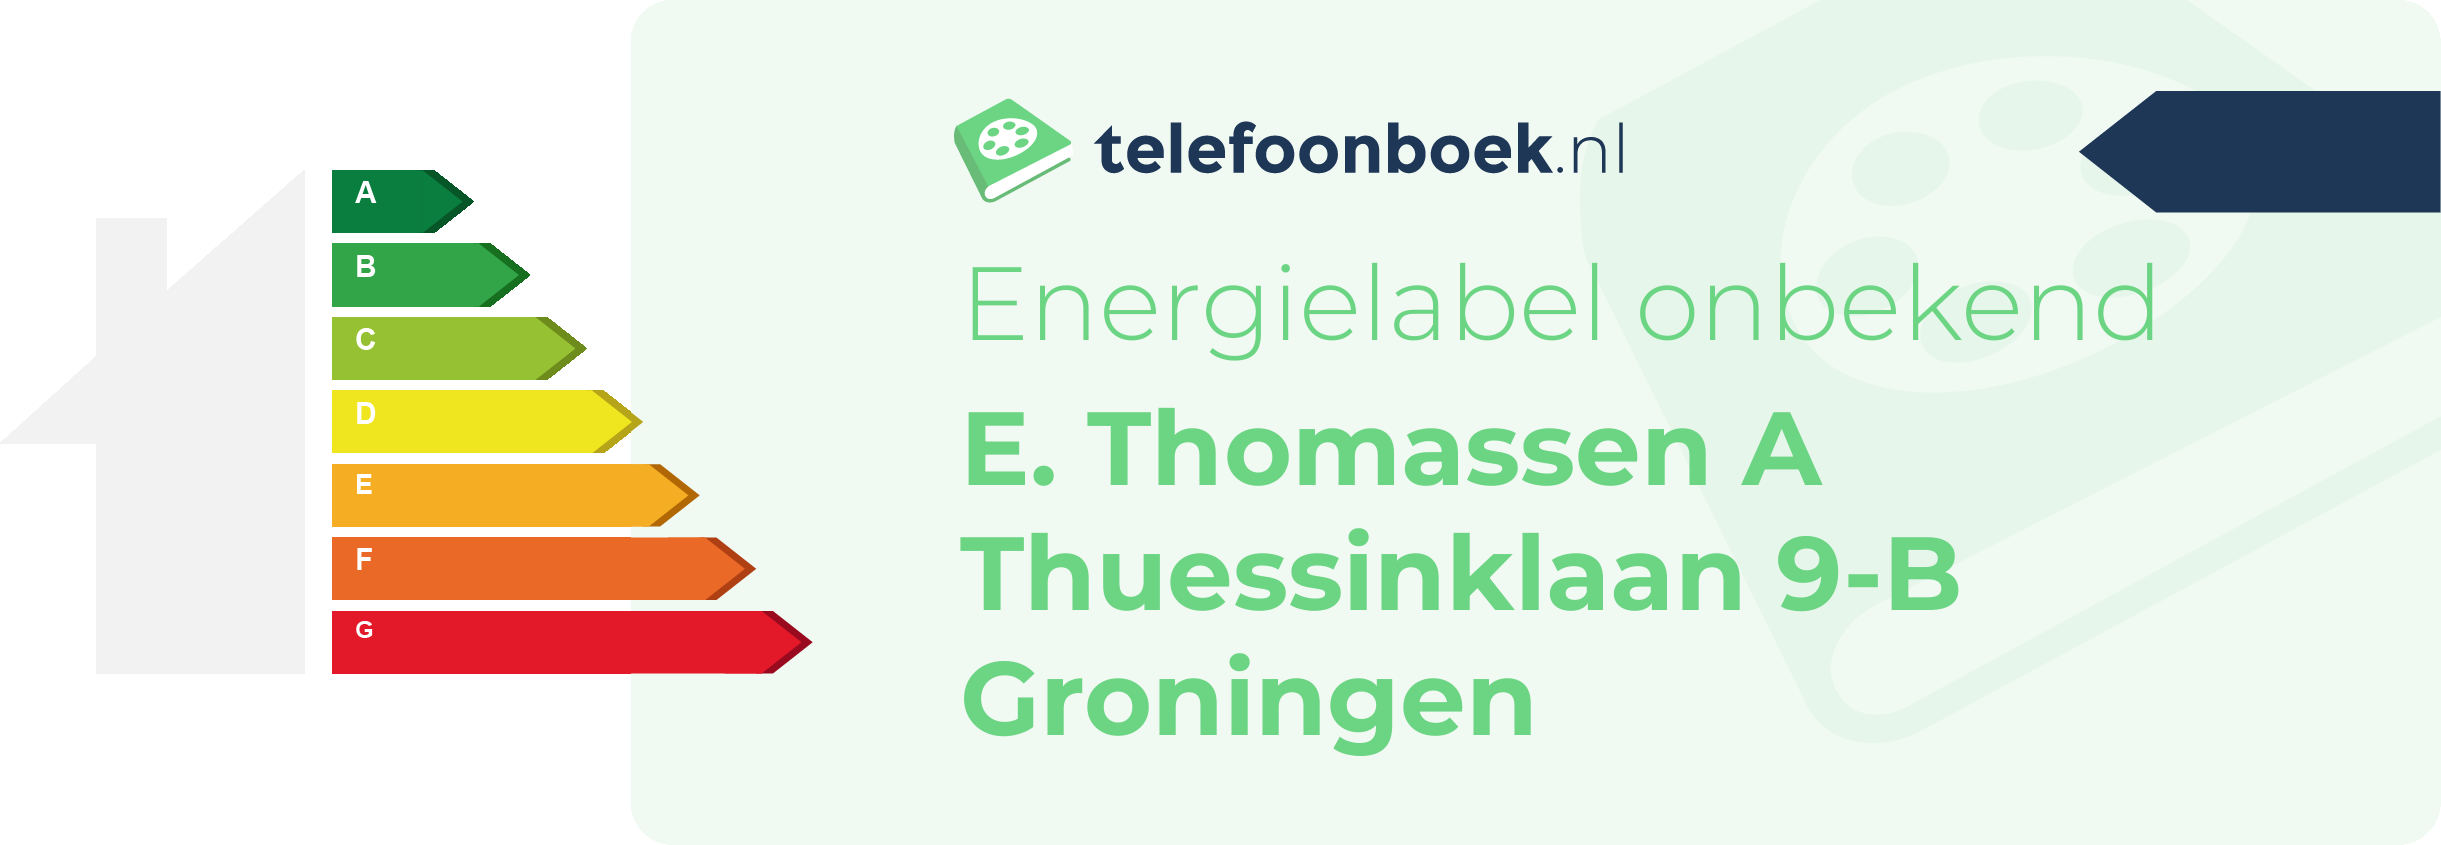 Energielabel E. Thomassen A Thuessinklaan 9-B Groningen